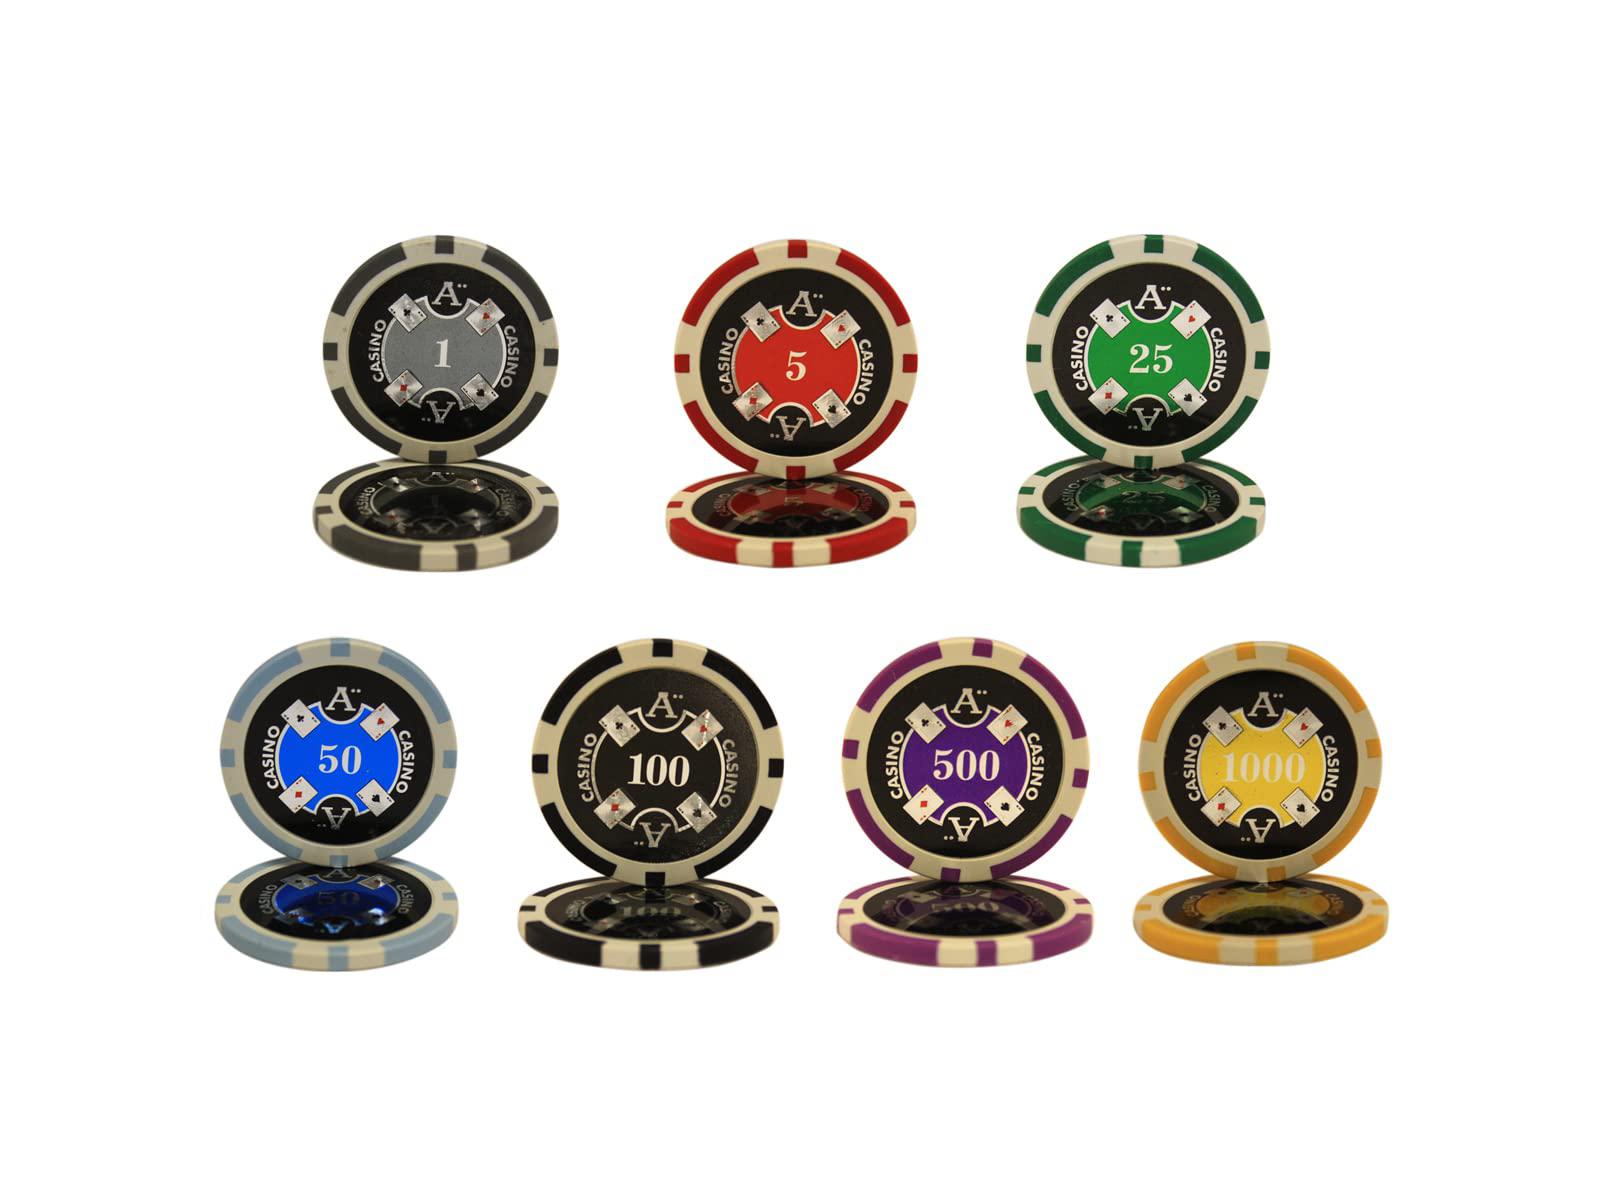 Mrc Poker mrc 500pcs ace casino poker chips set with wood case